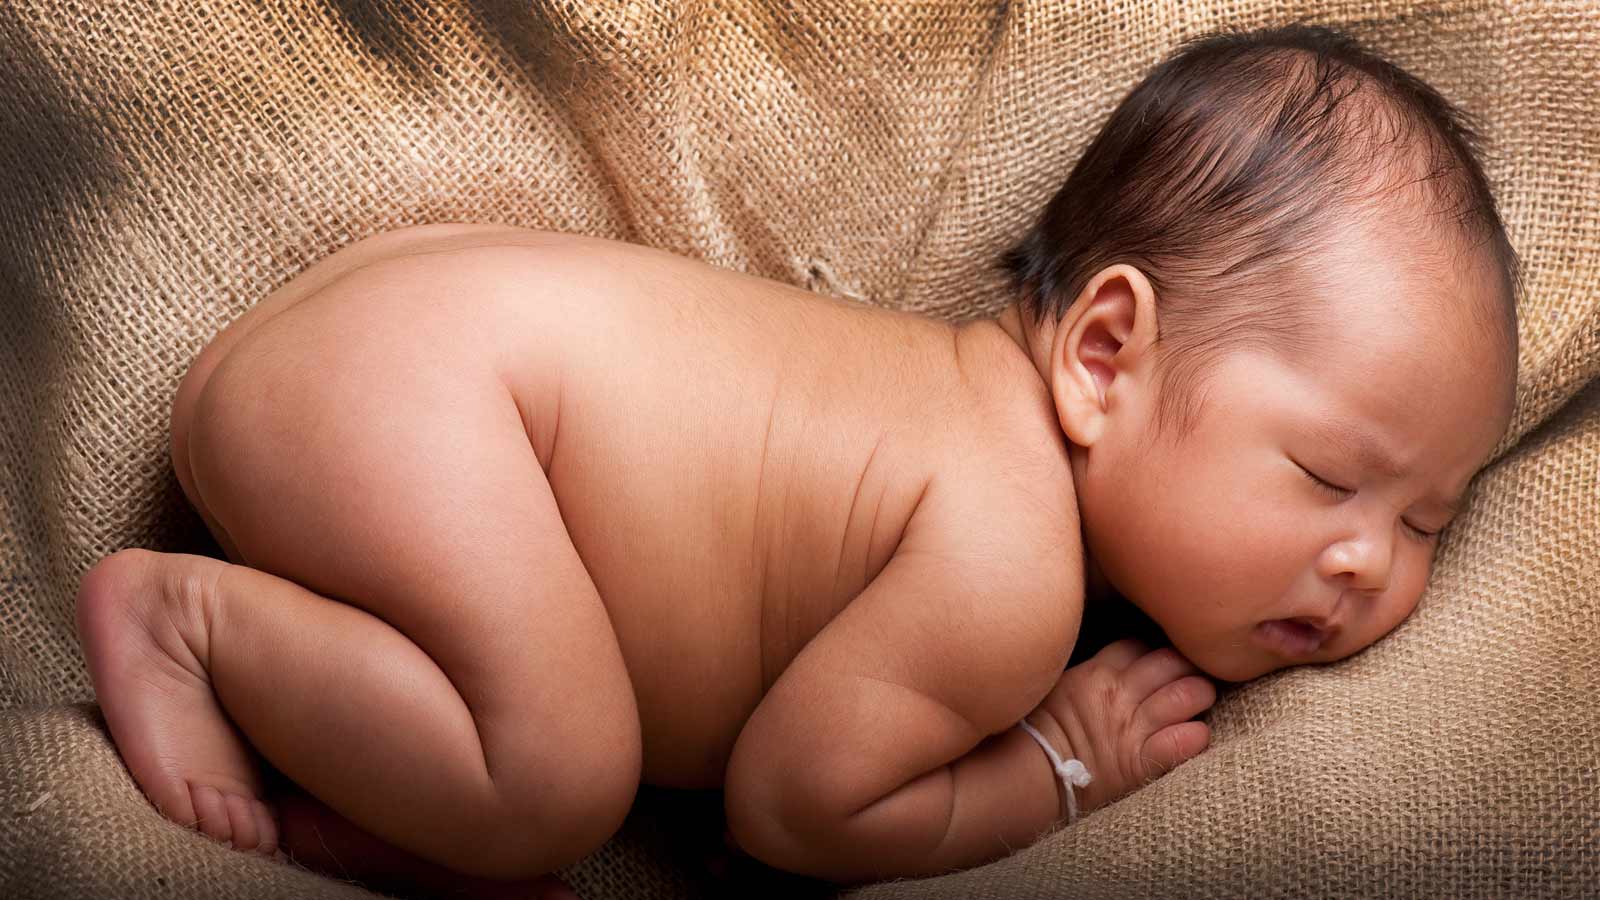 Baby Wallpaper Cute Photos Newborn